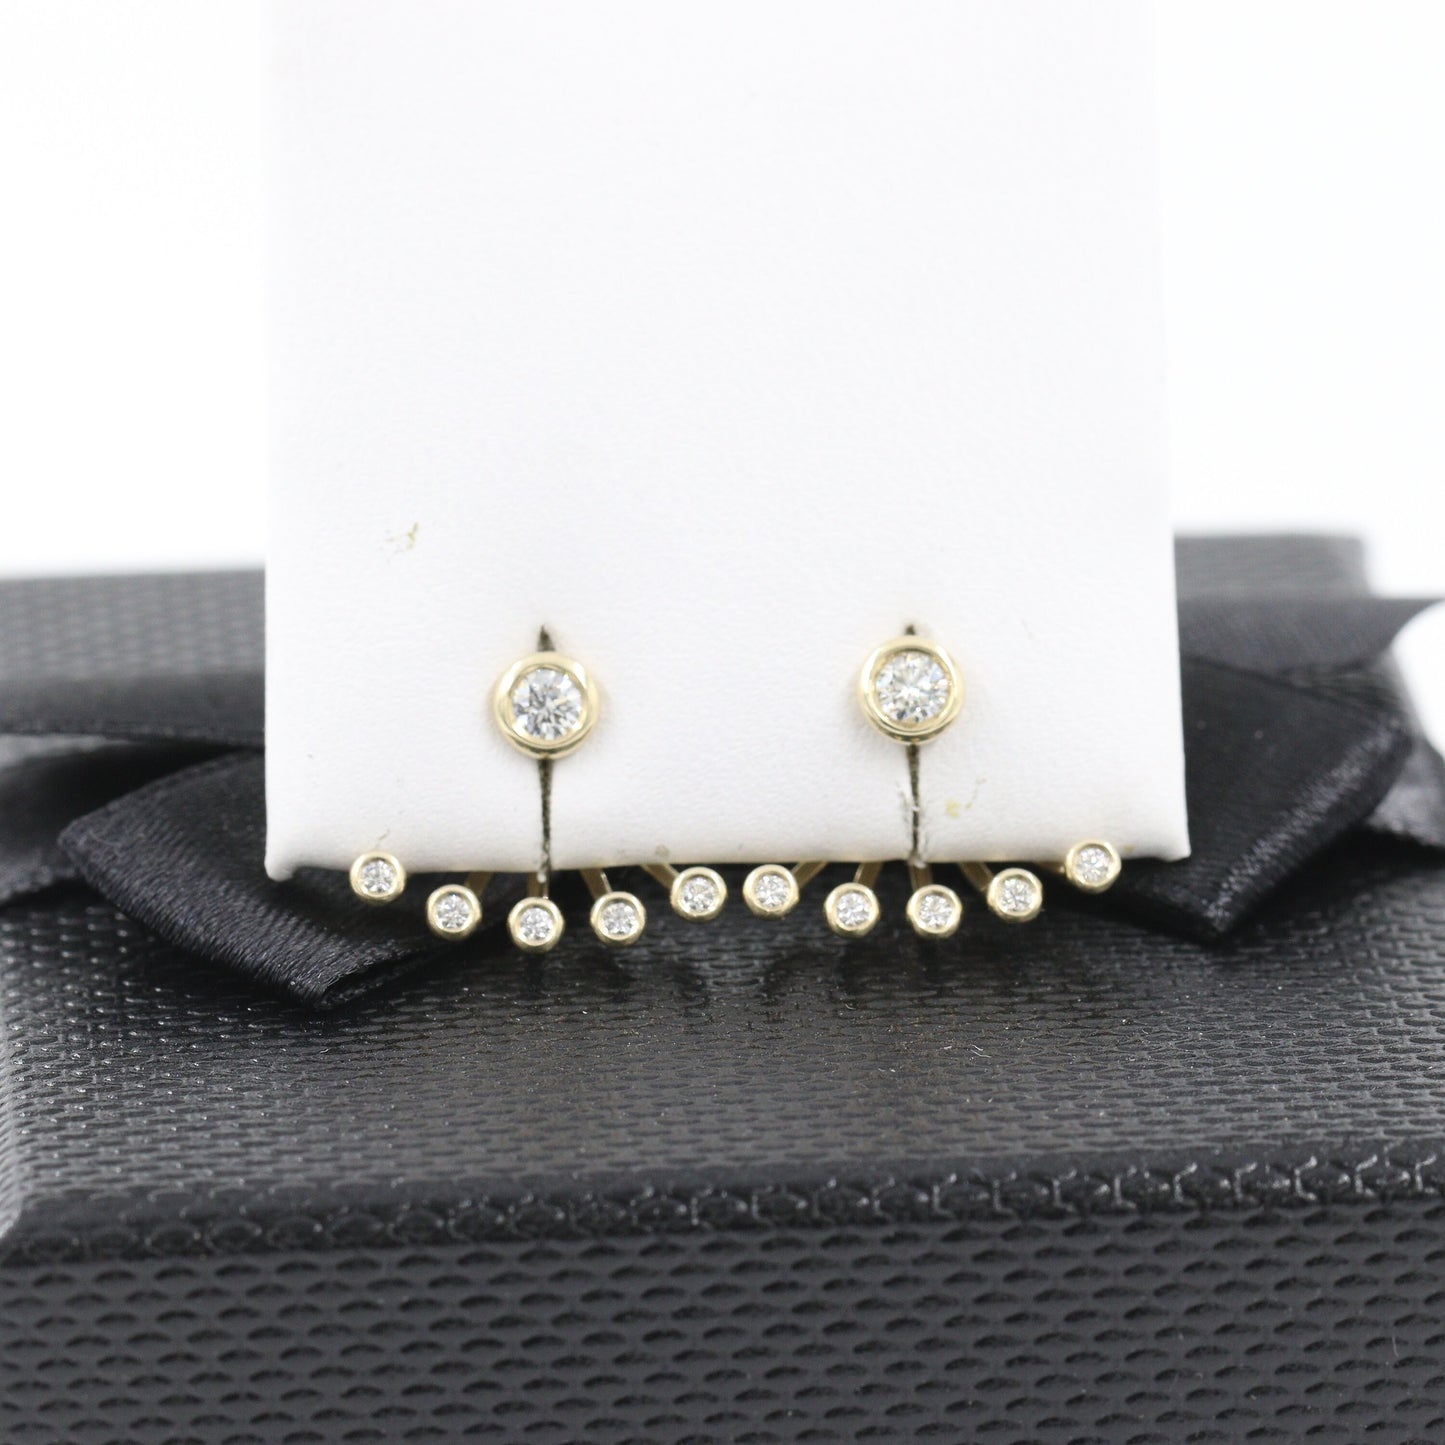 Ten Diamond Jacket Earrings / Bezel Set Diamond Earrings / Ten Diamond Jacket earring only / Natural Diamond Jacket Single or Pair Earrings